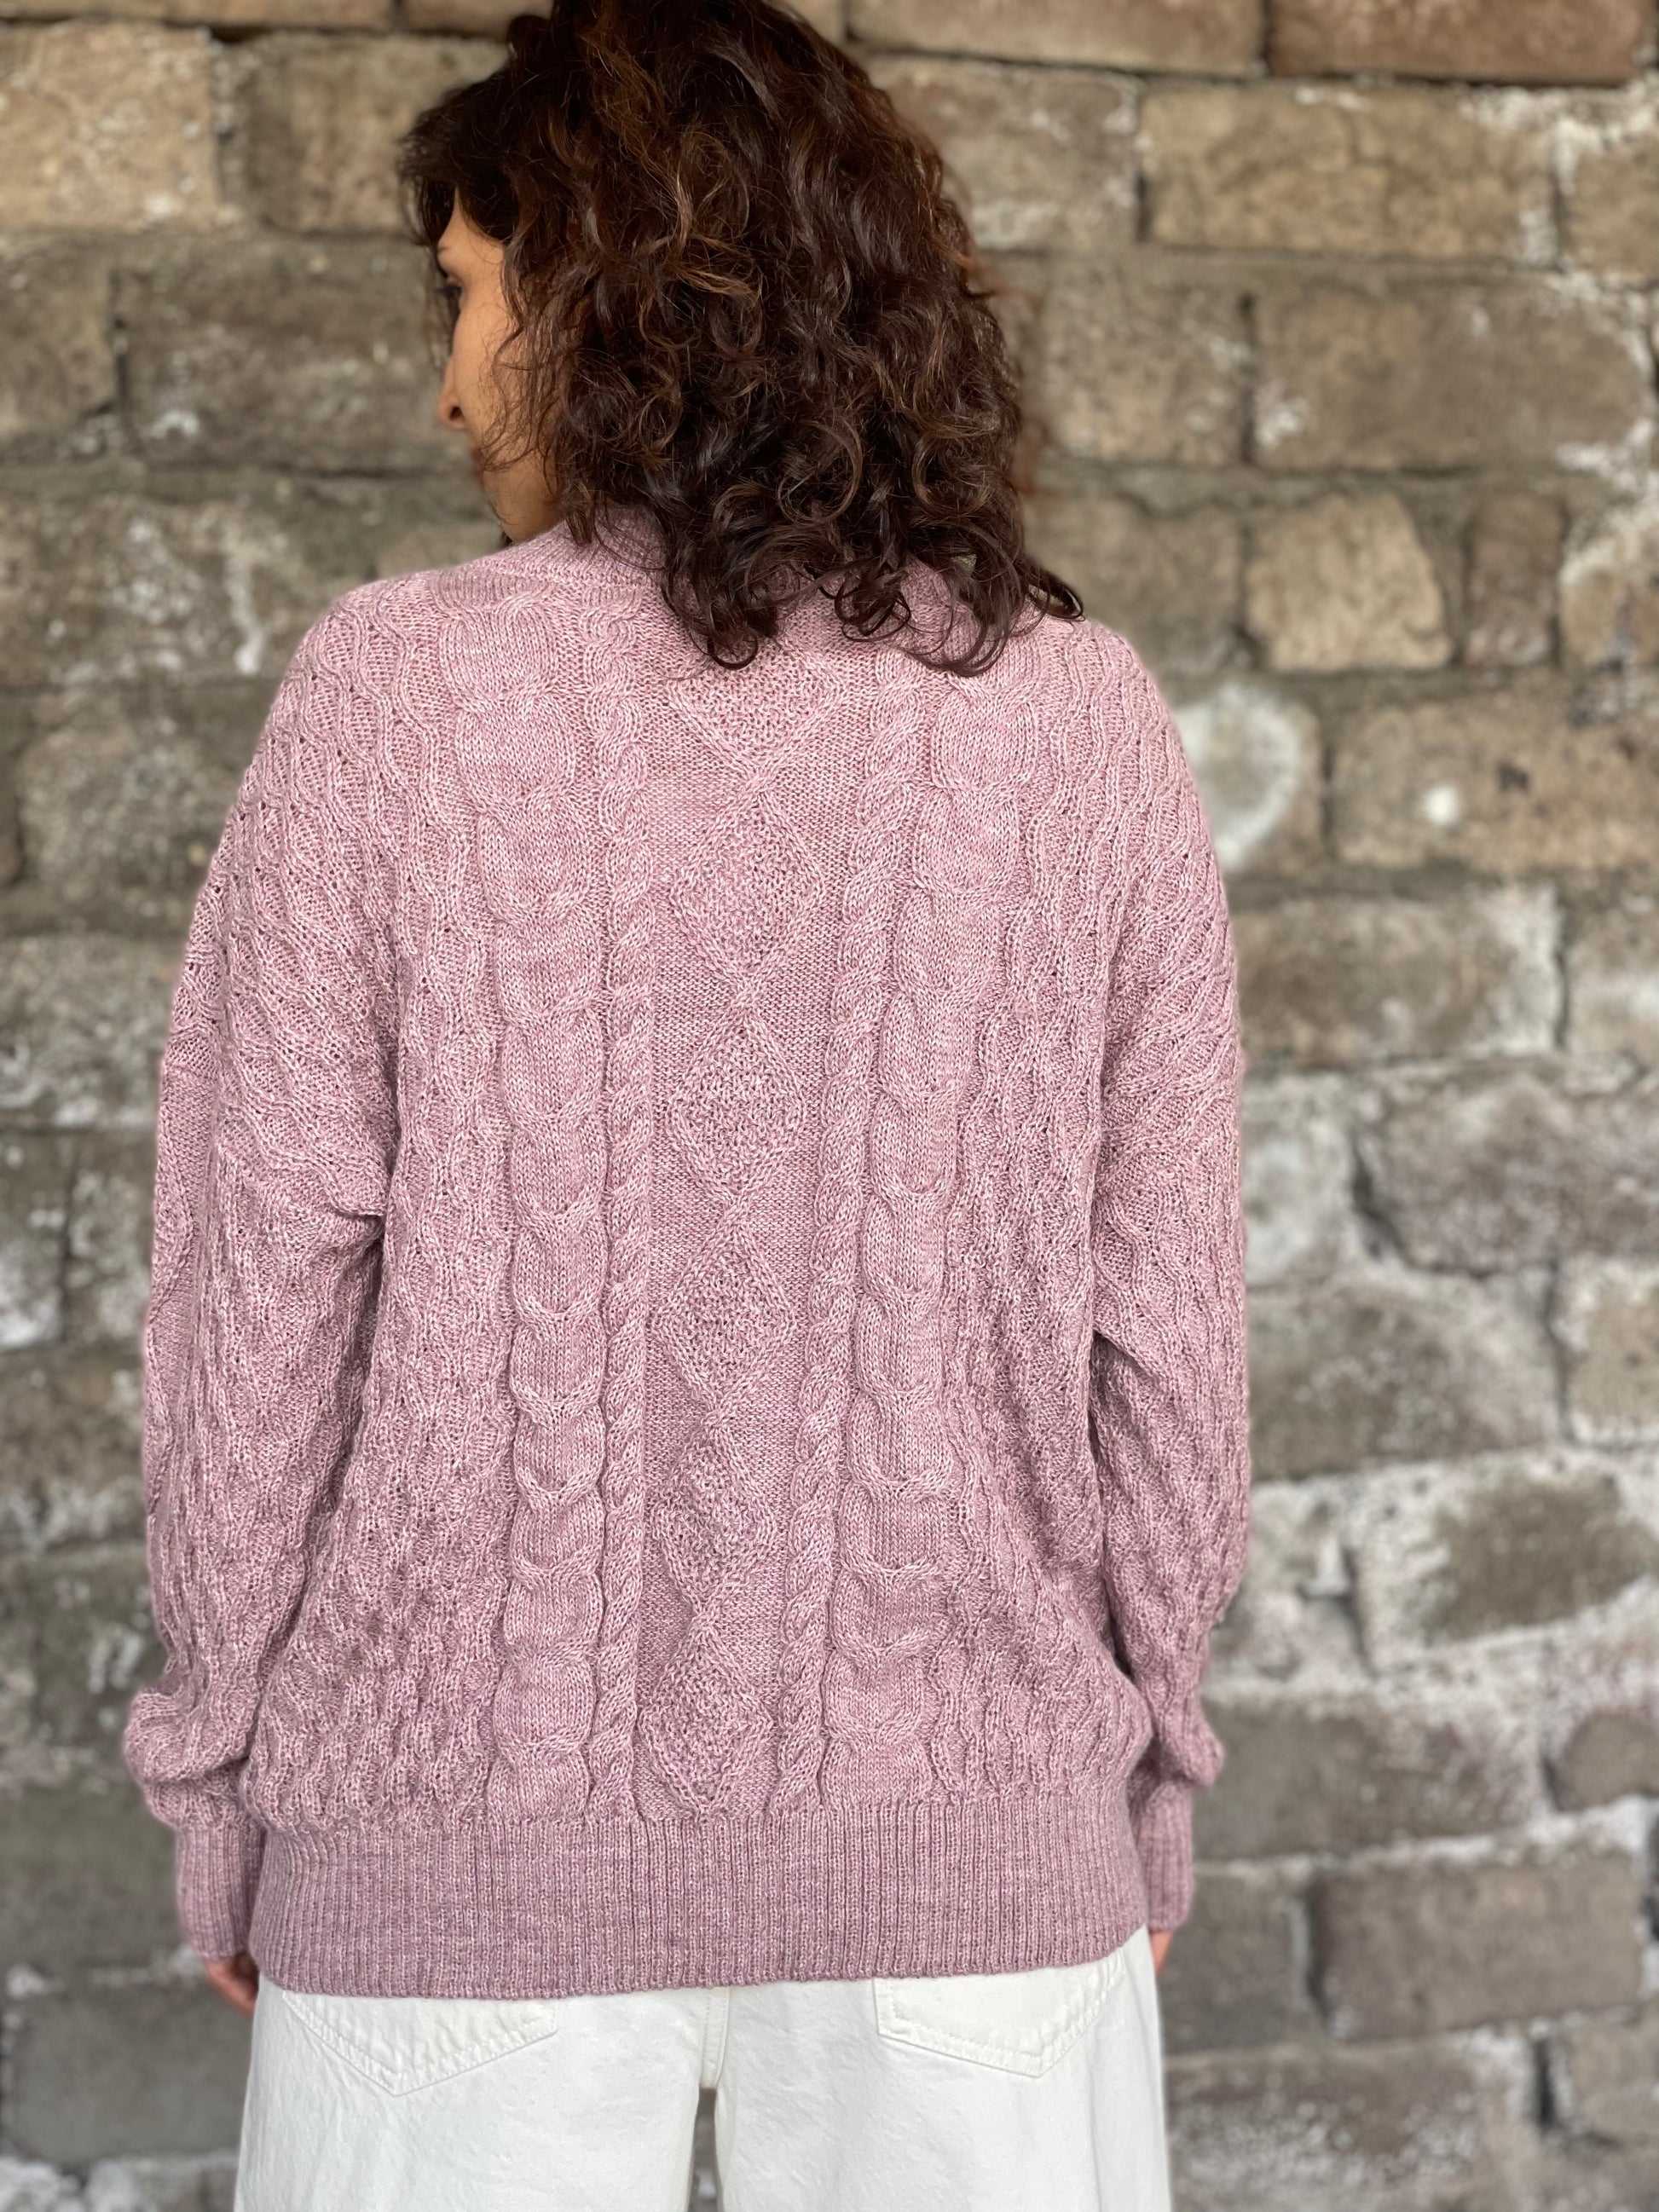 Alpaca Wool Sweater in pink color for women 